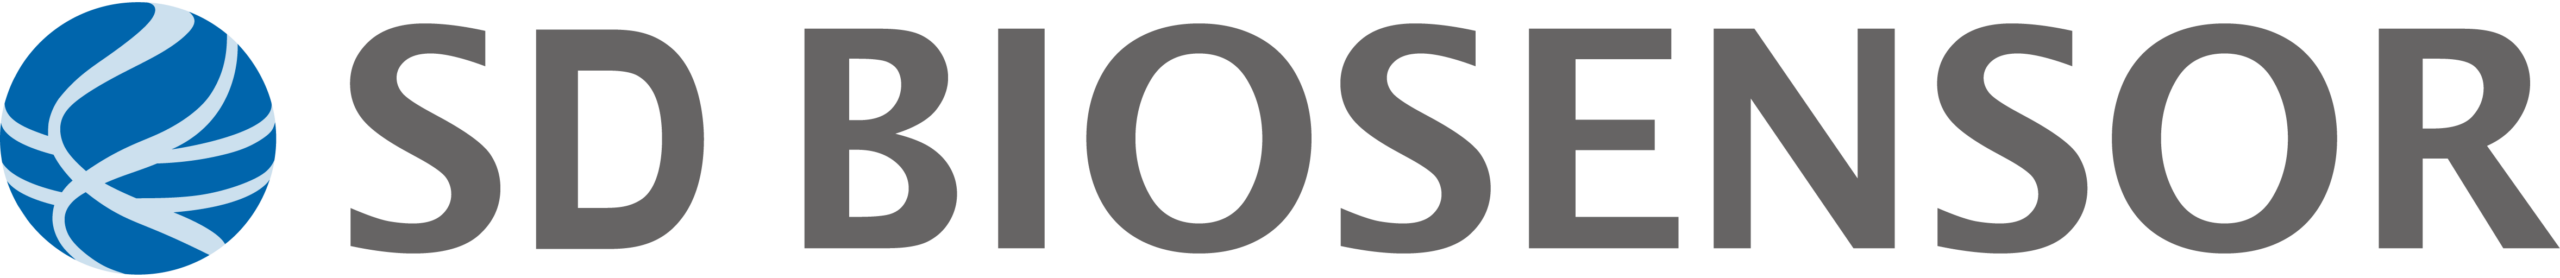 SD Biosensor Logo